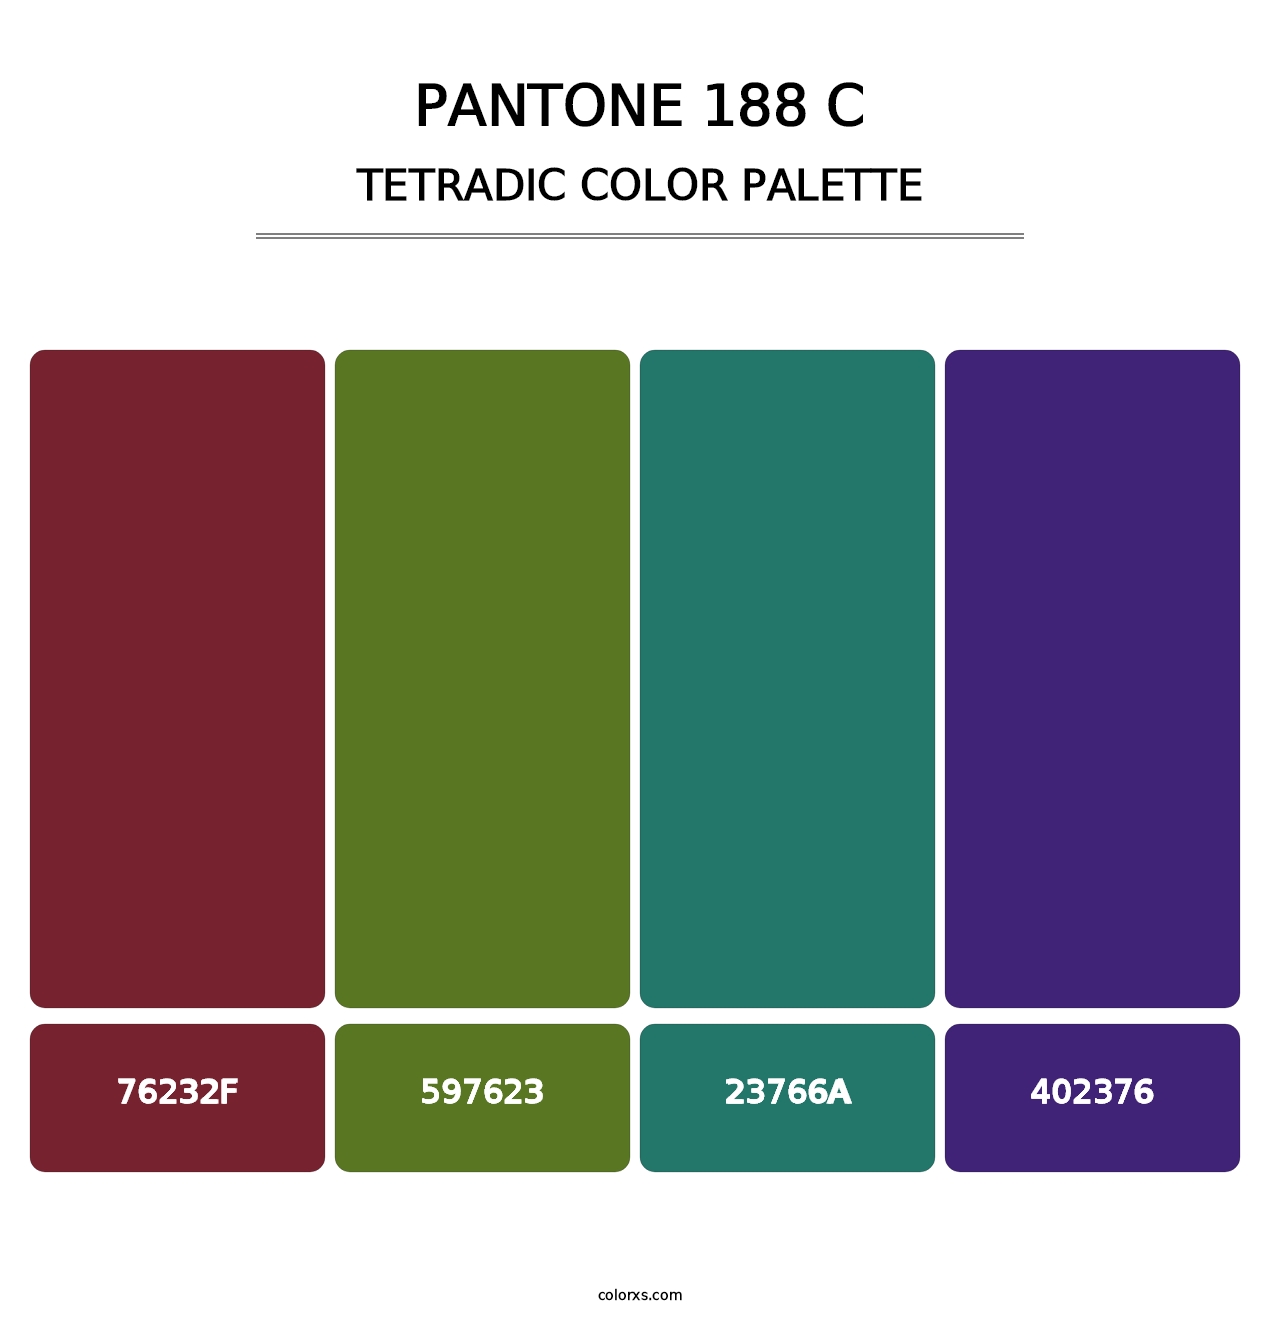 PANTONE 188 C - Tetradic Color Palette